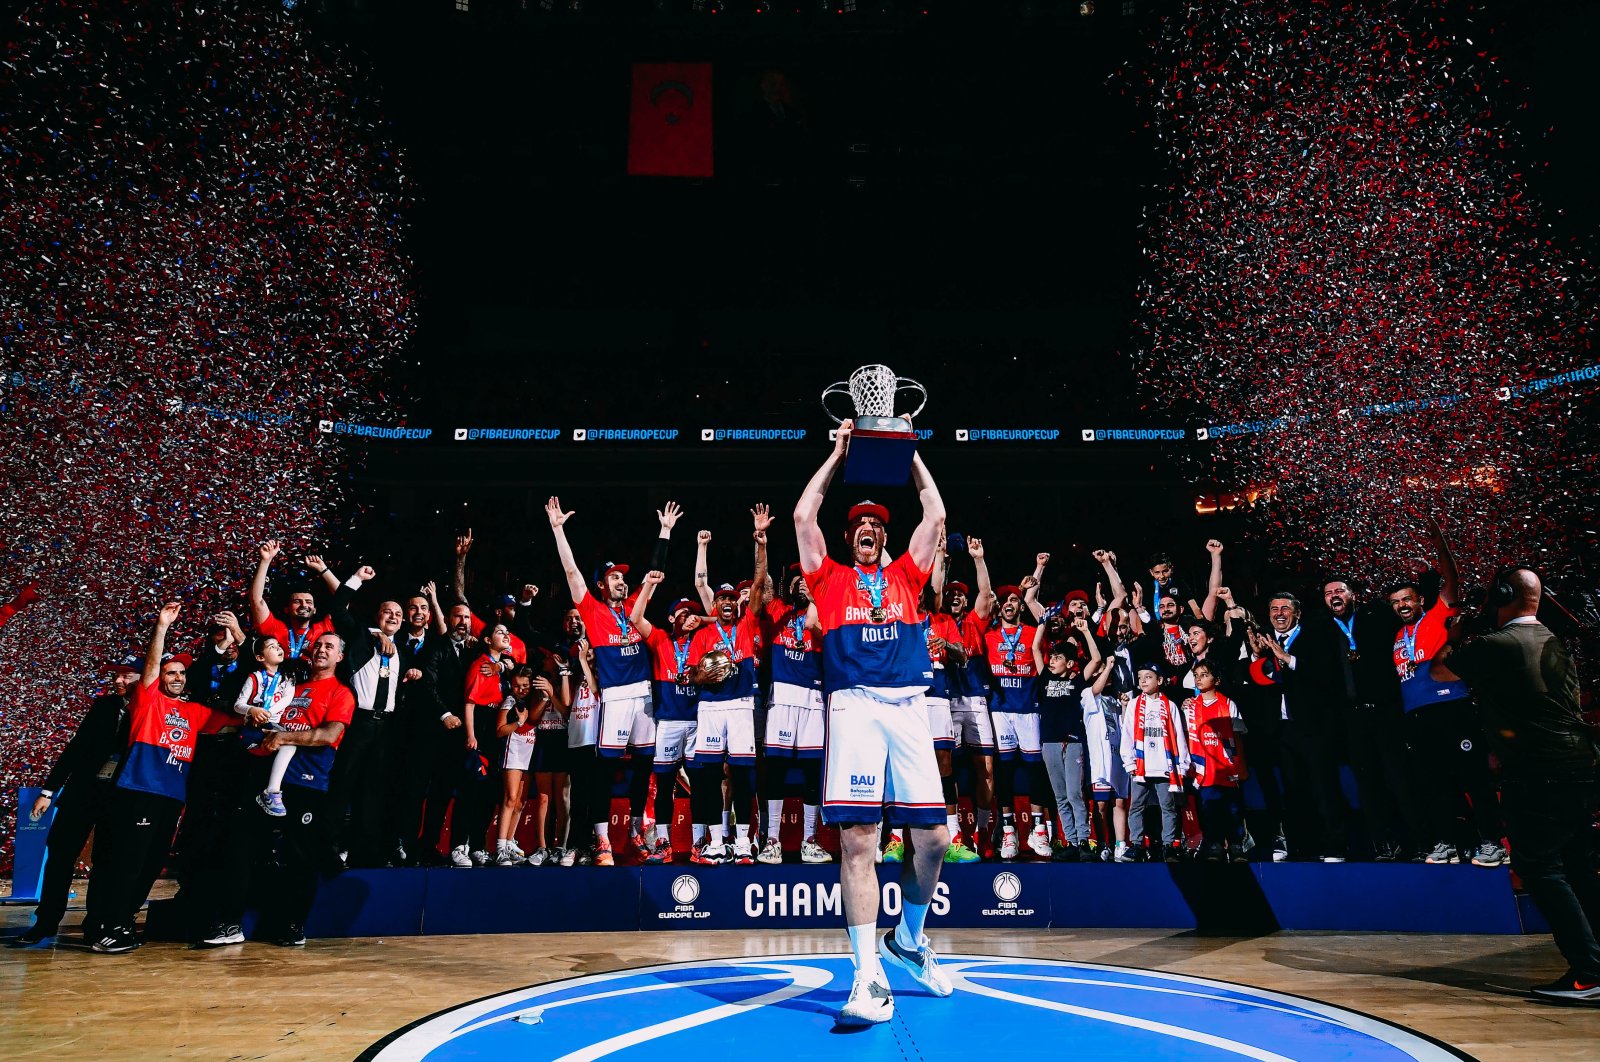 Bahçeşehir Koleji players celebrate winning the 2022 FIBA Europe Cup, Istanbul, Turkey, April 27, 2022. (DHA Photo)